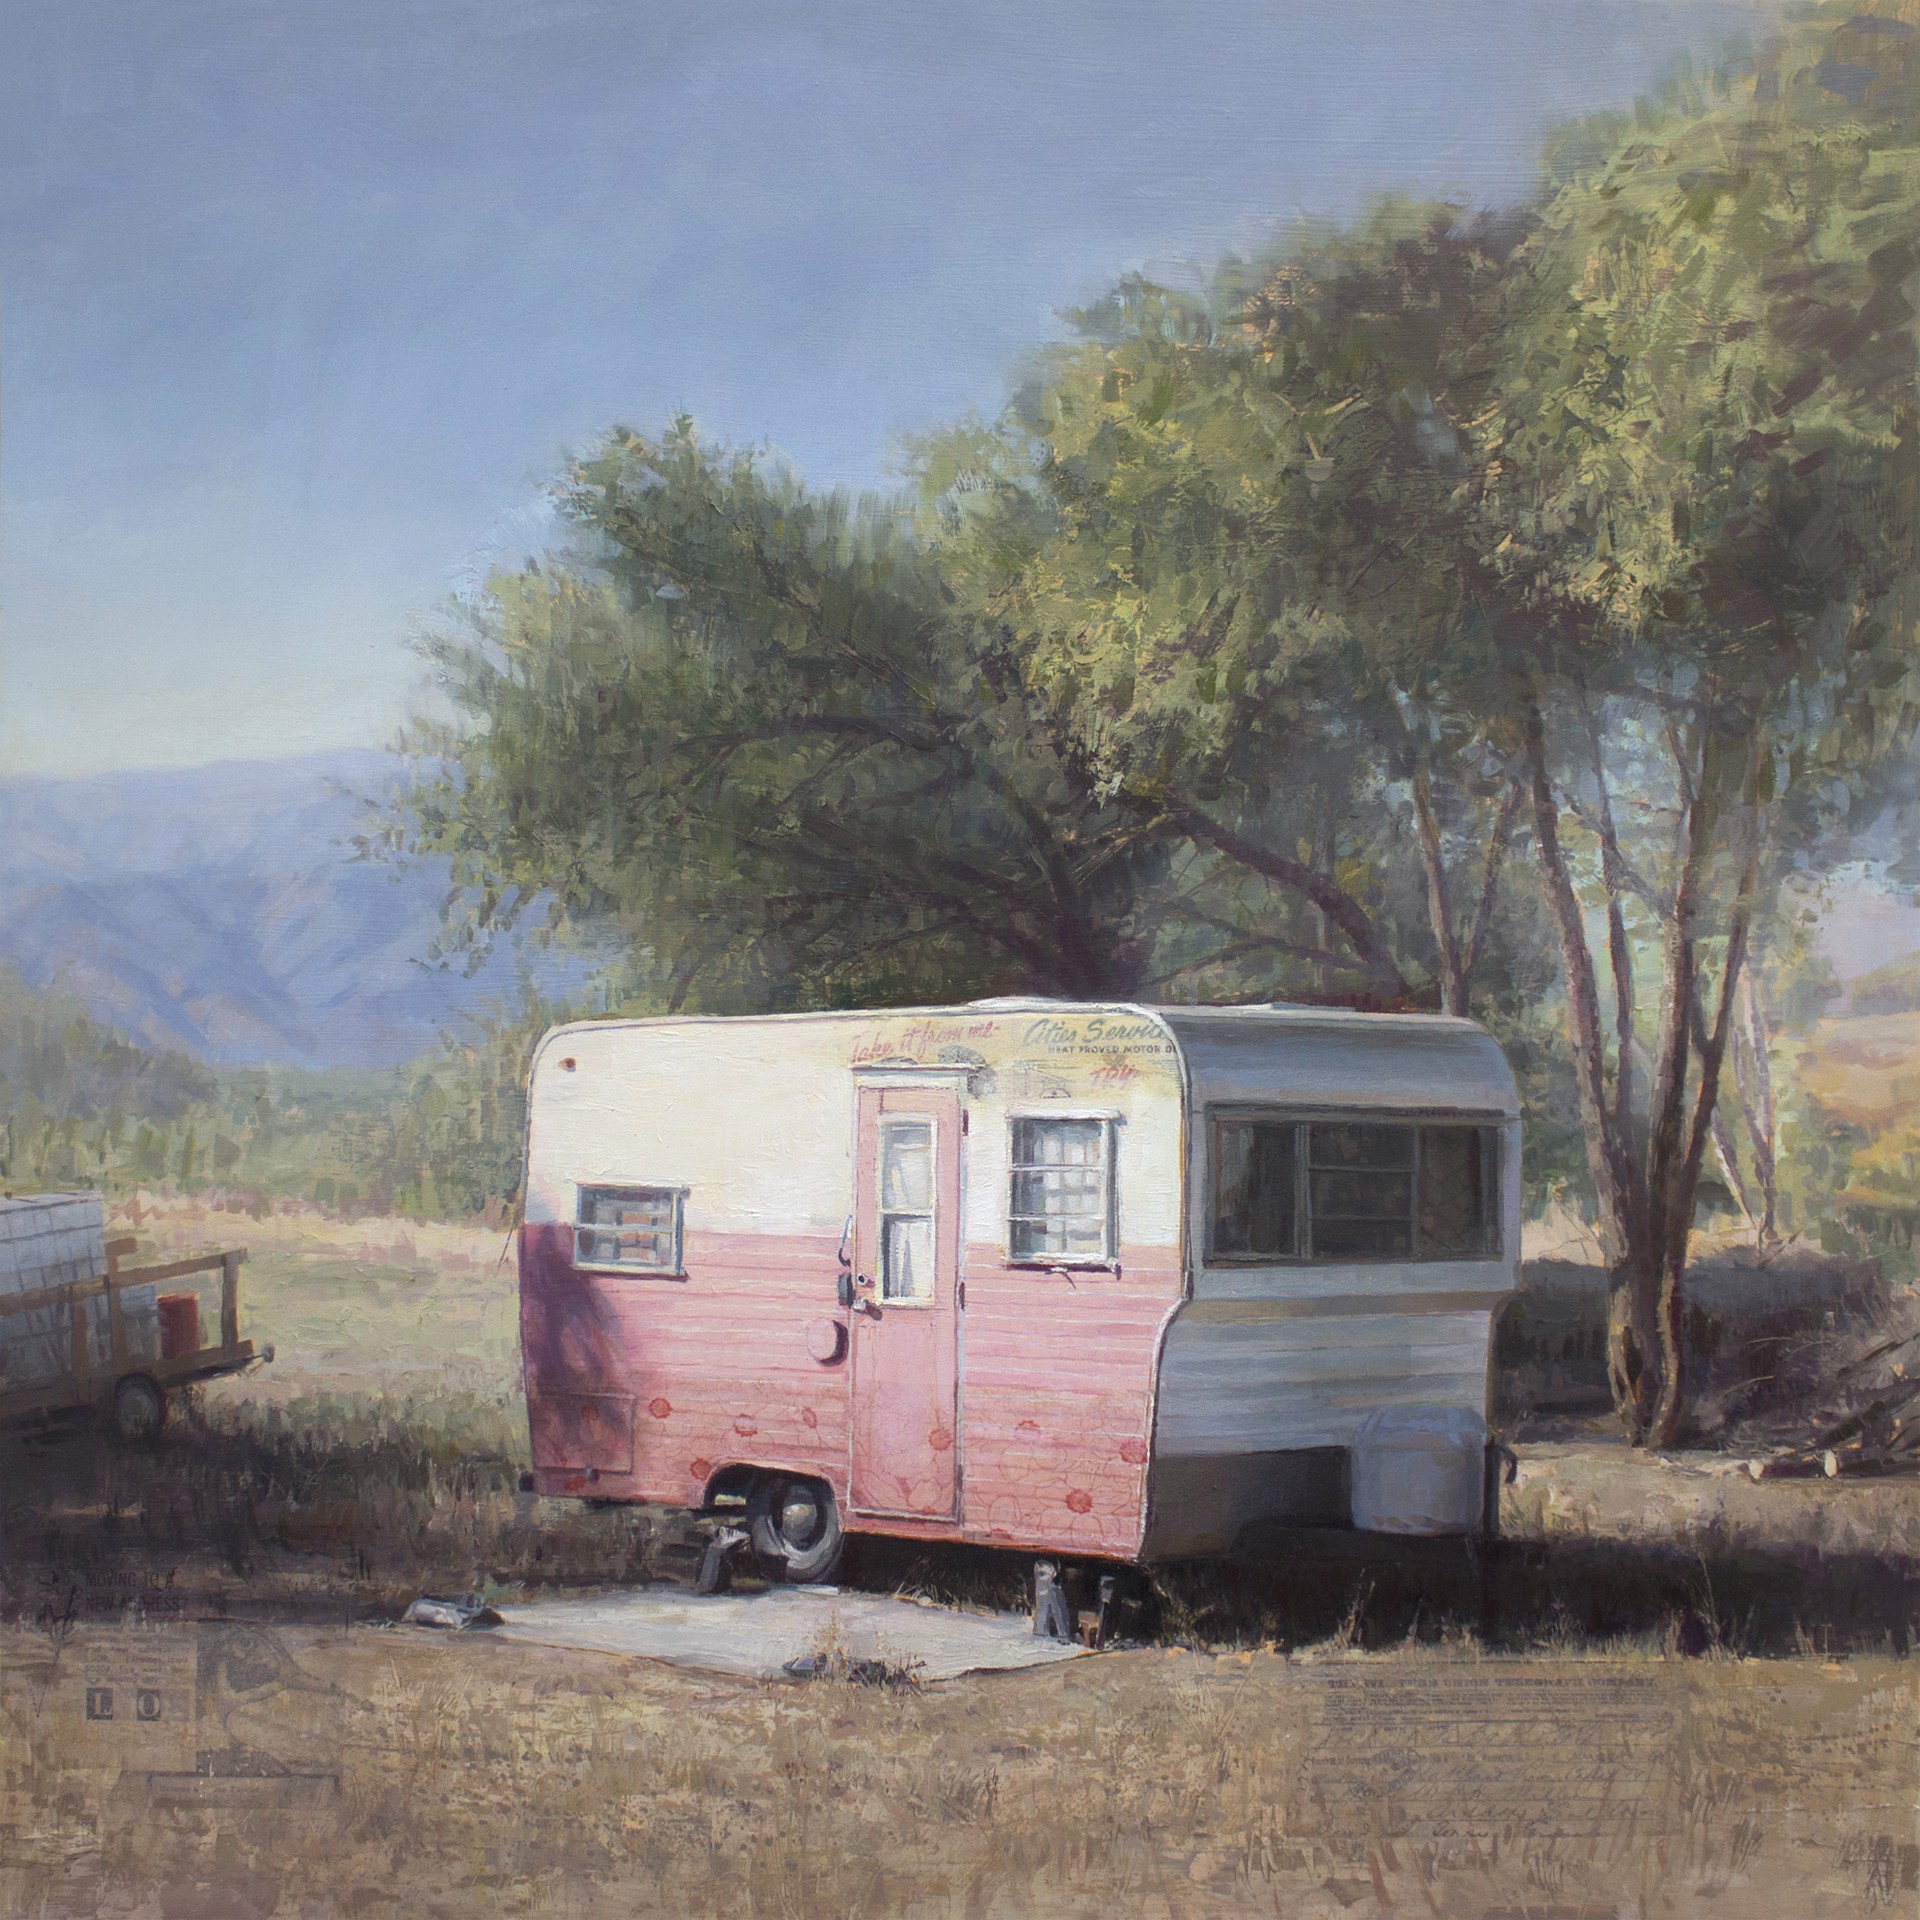 Mobile Base Camp by Jason Kowalski